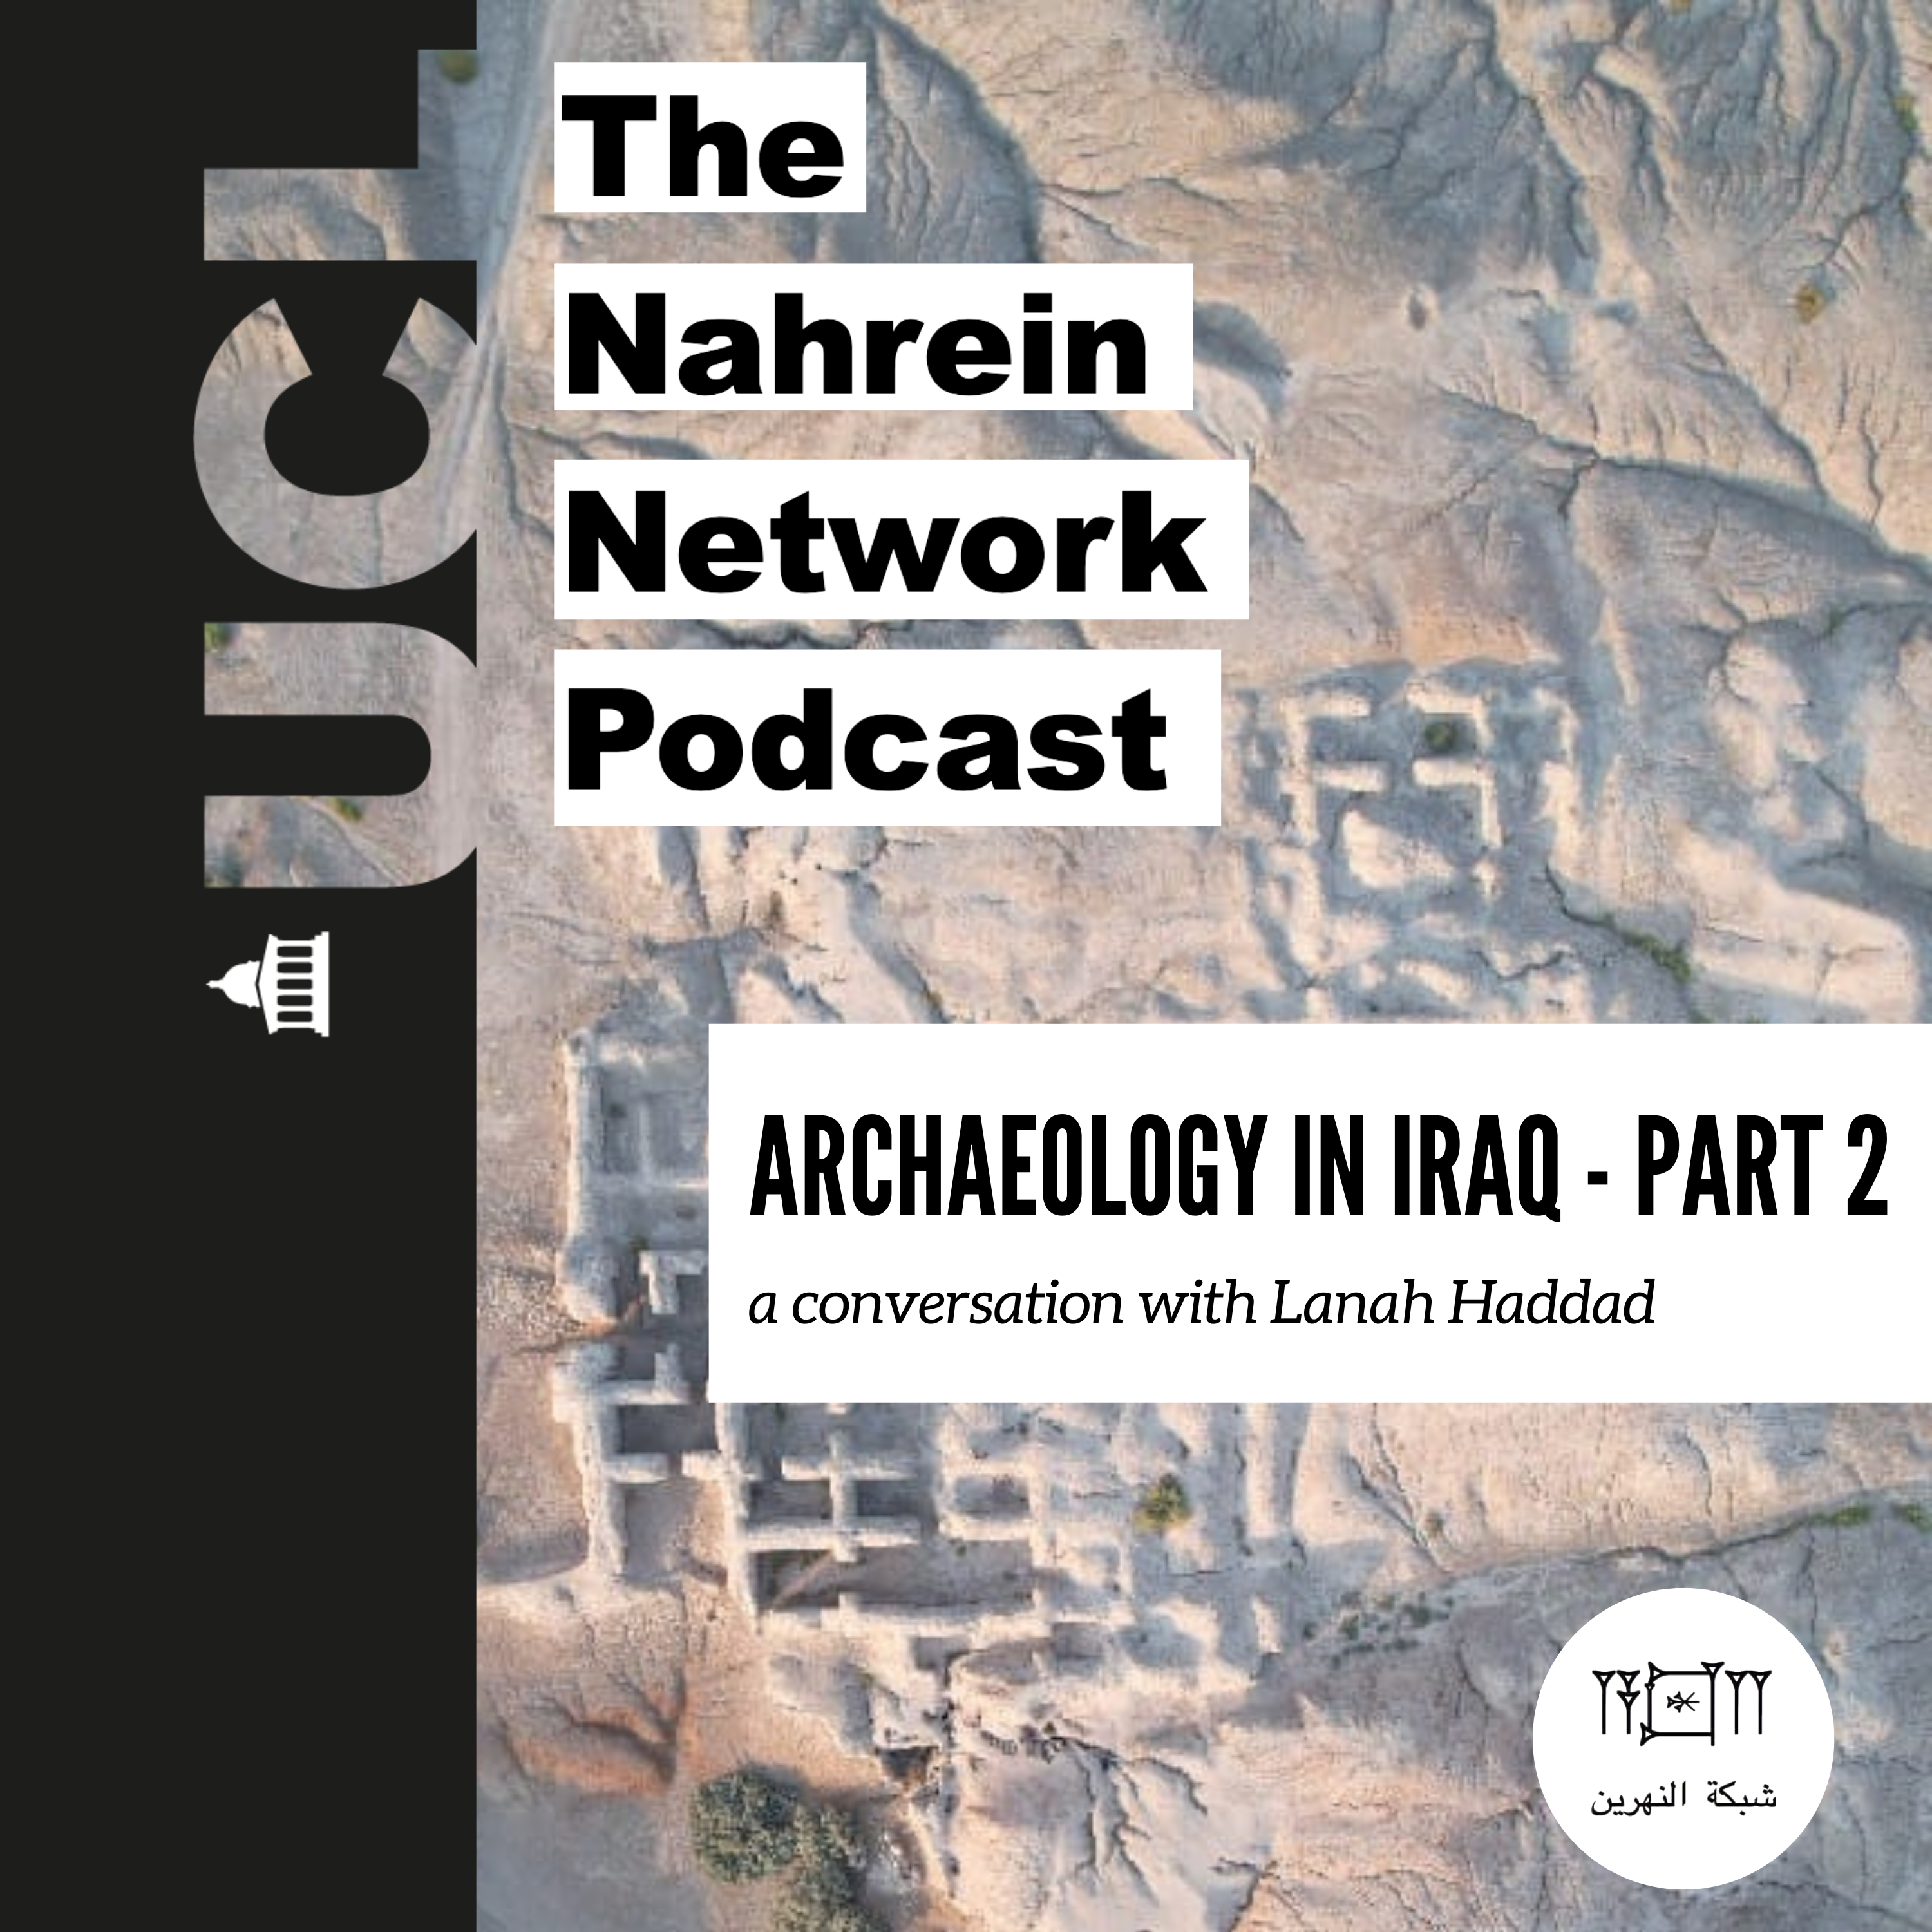 Lanah Haddad podcast 2